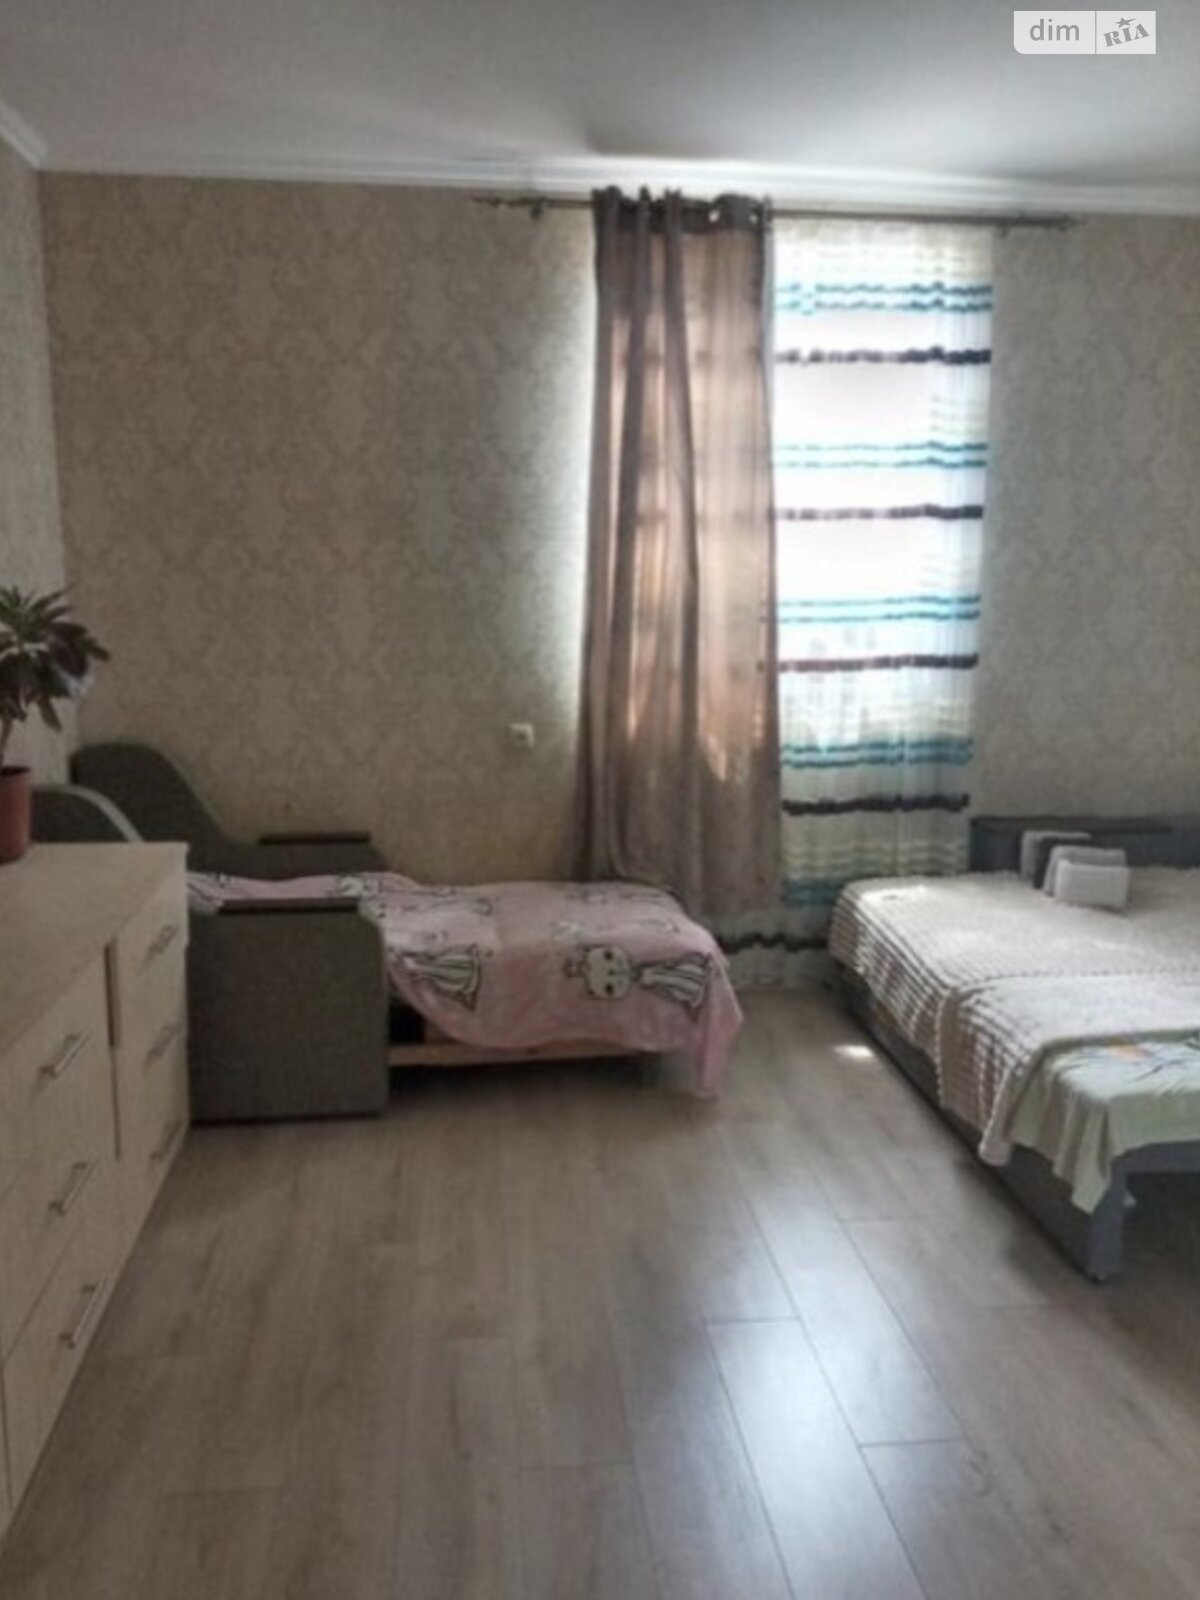 Продажа части дома в Одессе, 7-я улица Пересыпская, 1 комната фото 1